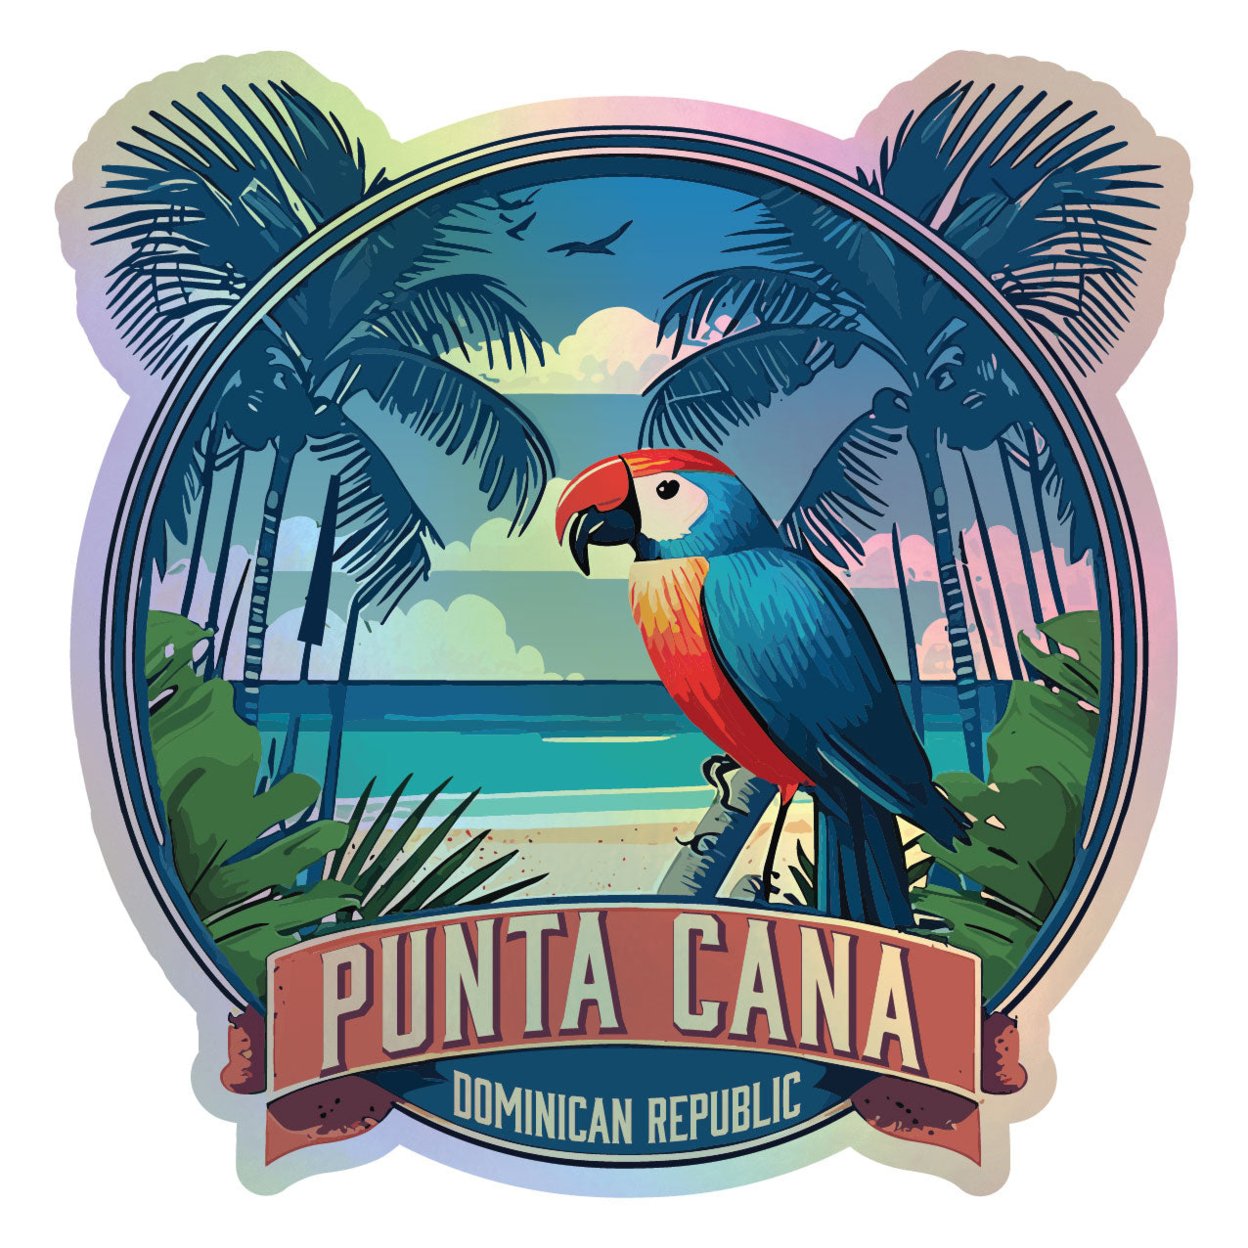 Punta Cana Dominican Republic Holographic Souvenir Vinyl Decal Sticker Parrot Design - 18 Inch